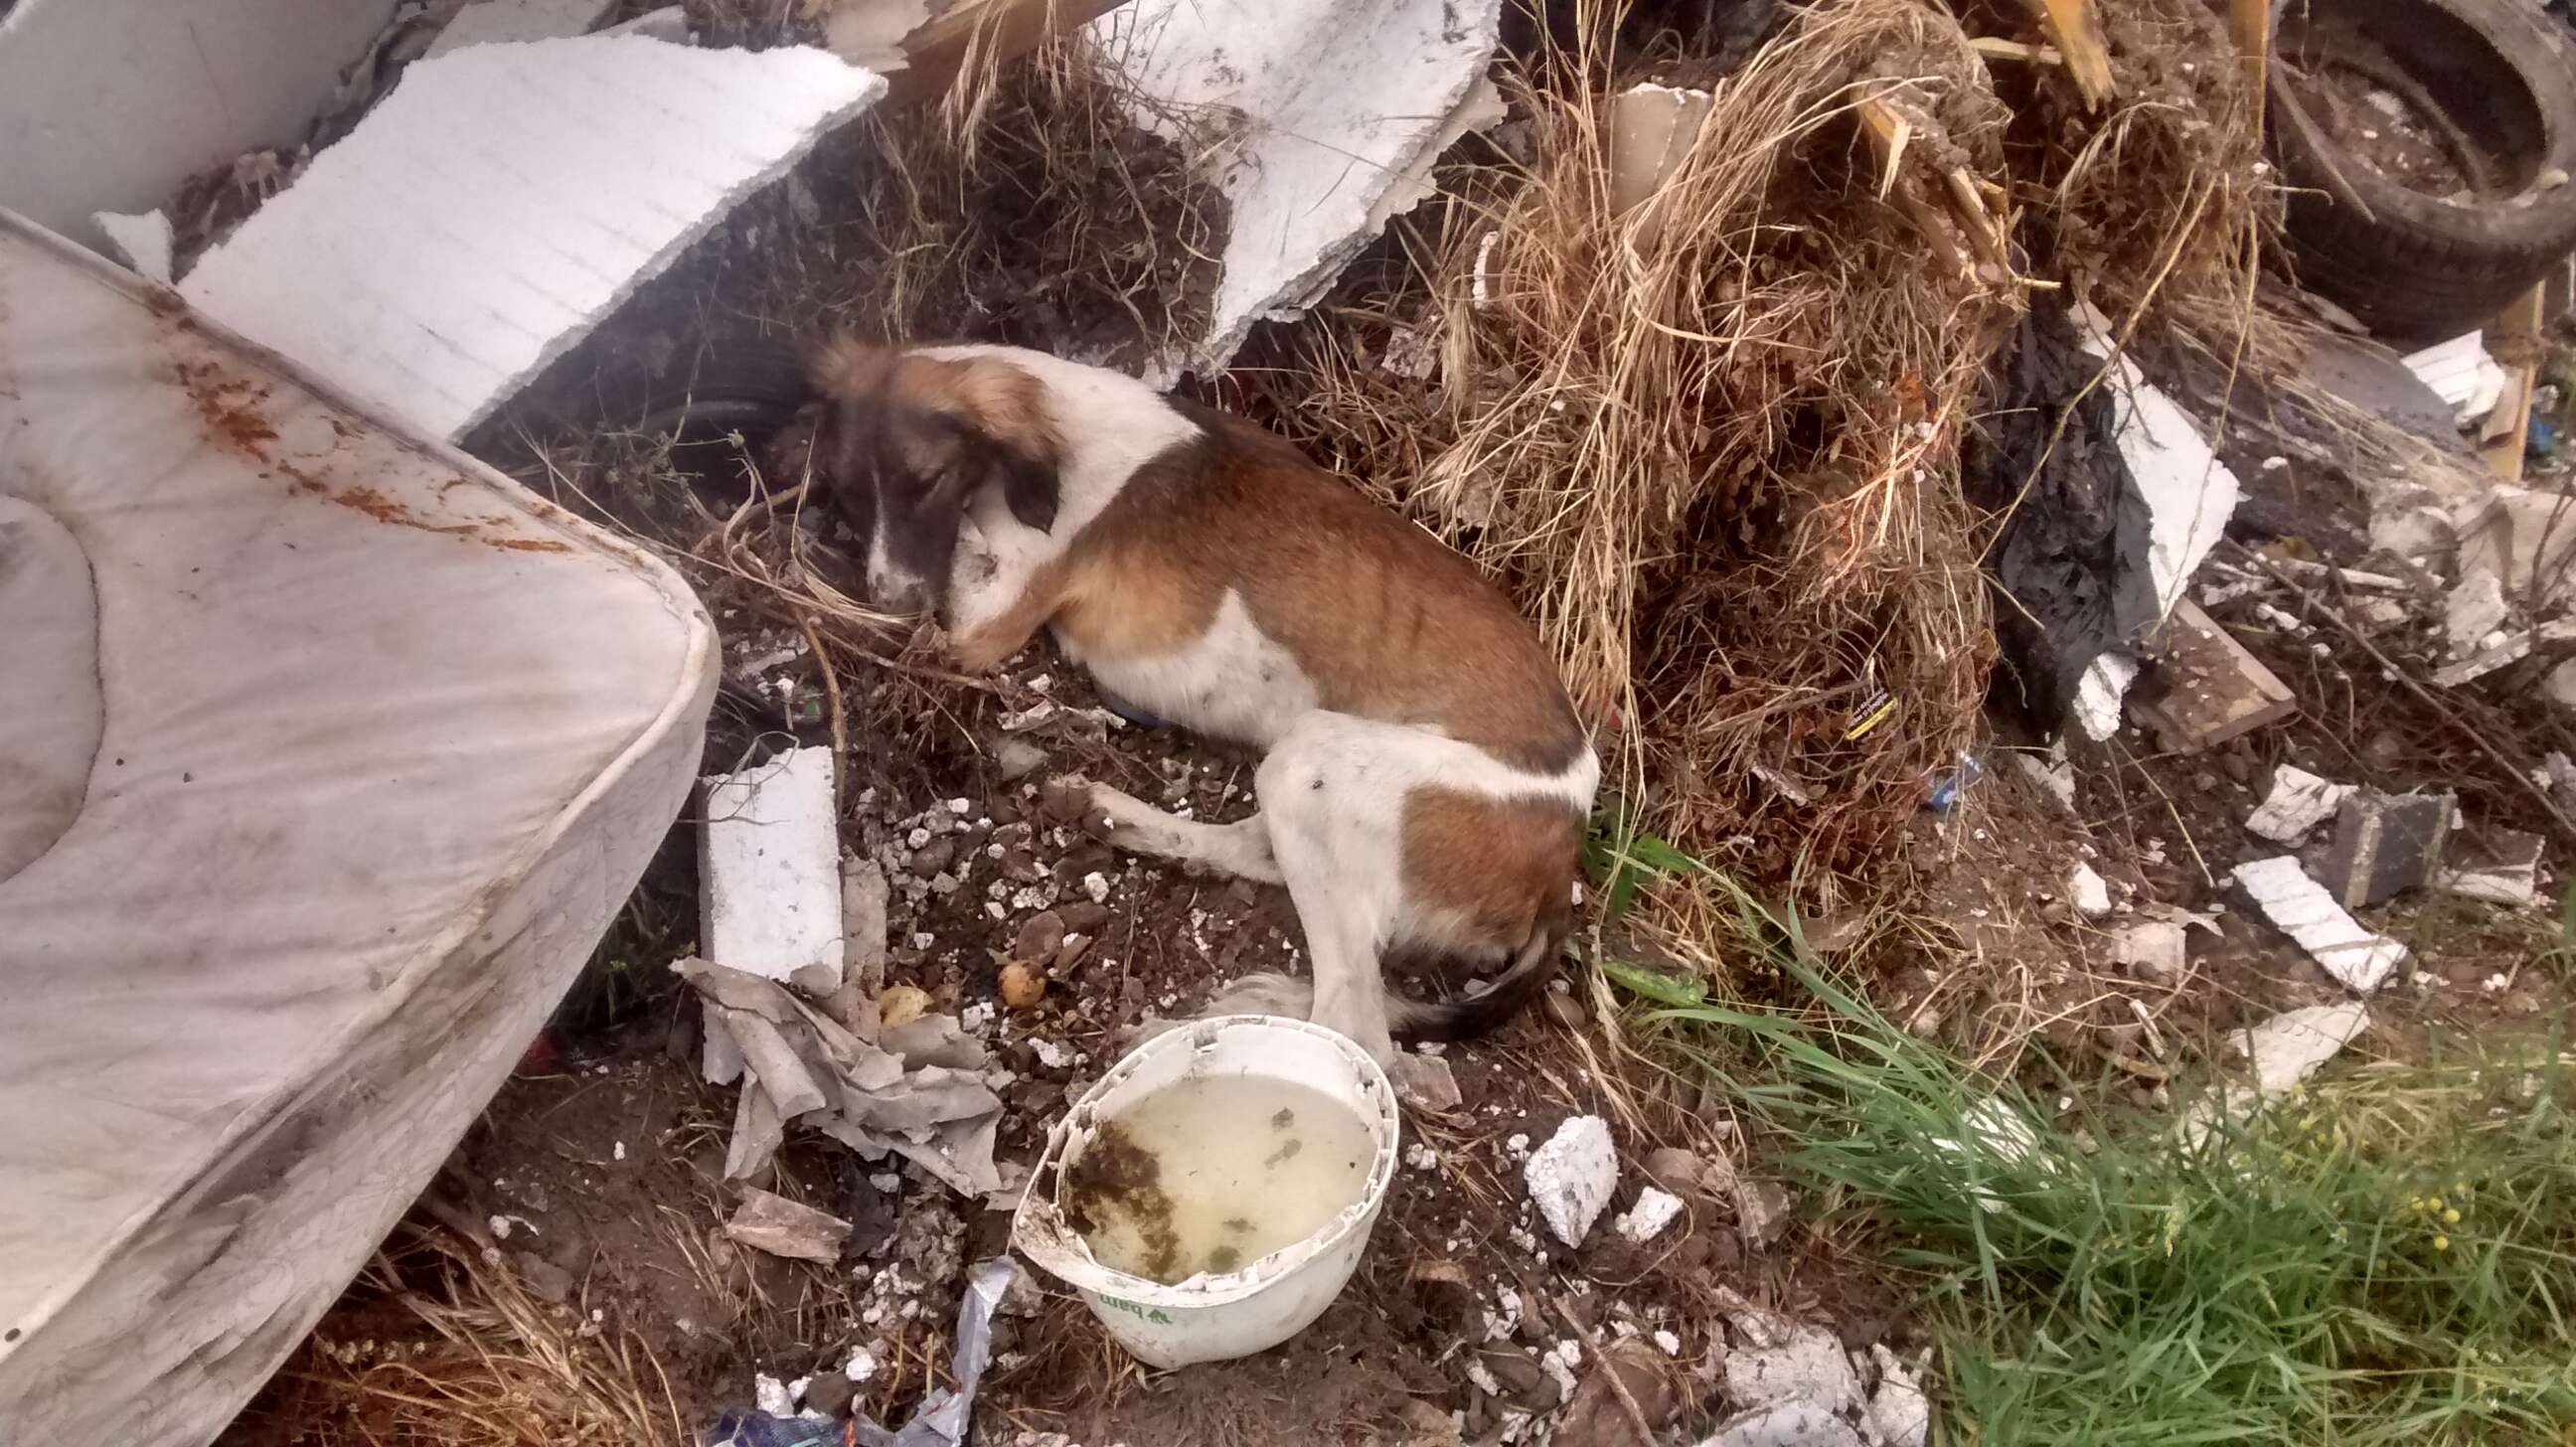 sick dog found in trash pile